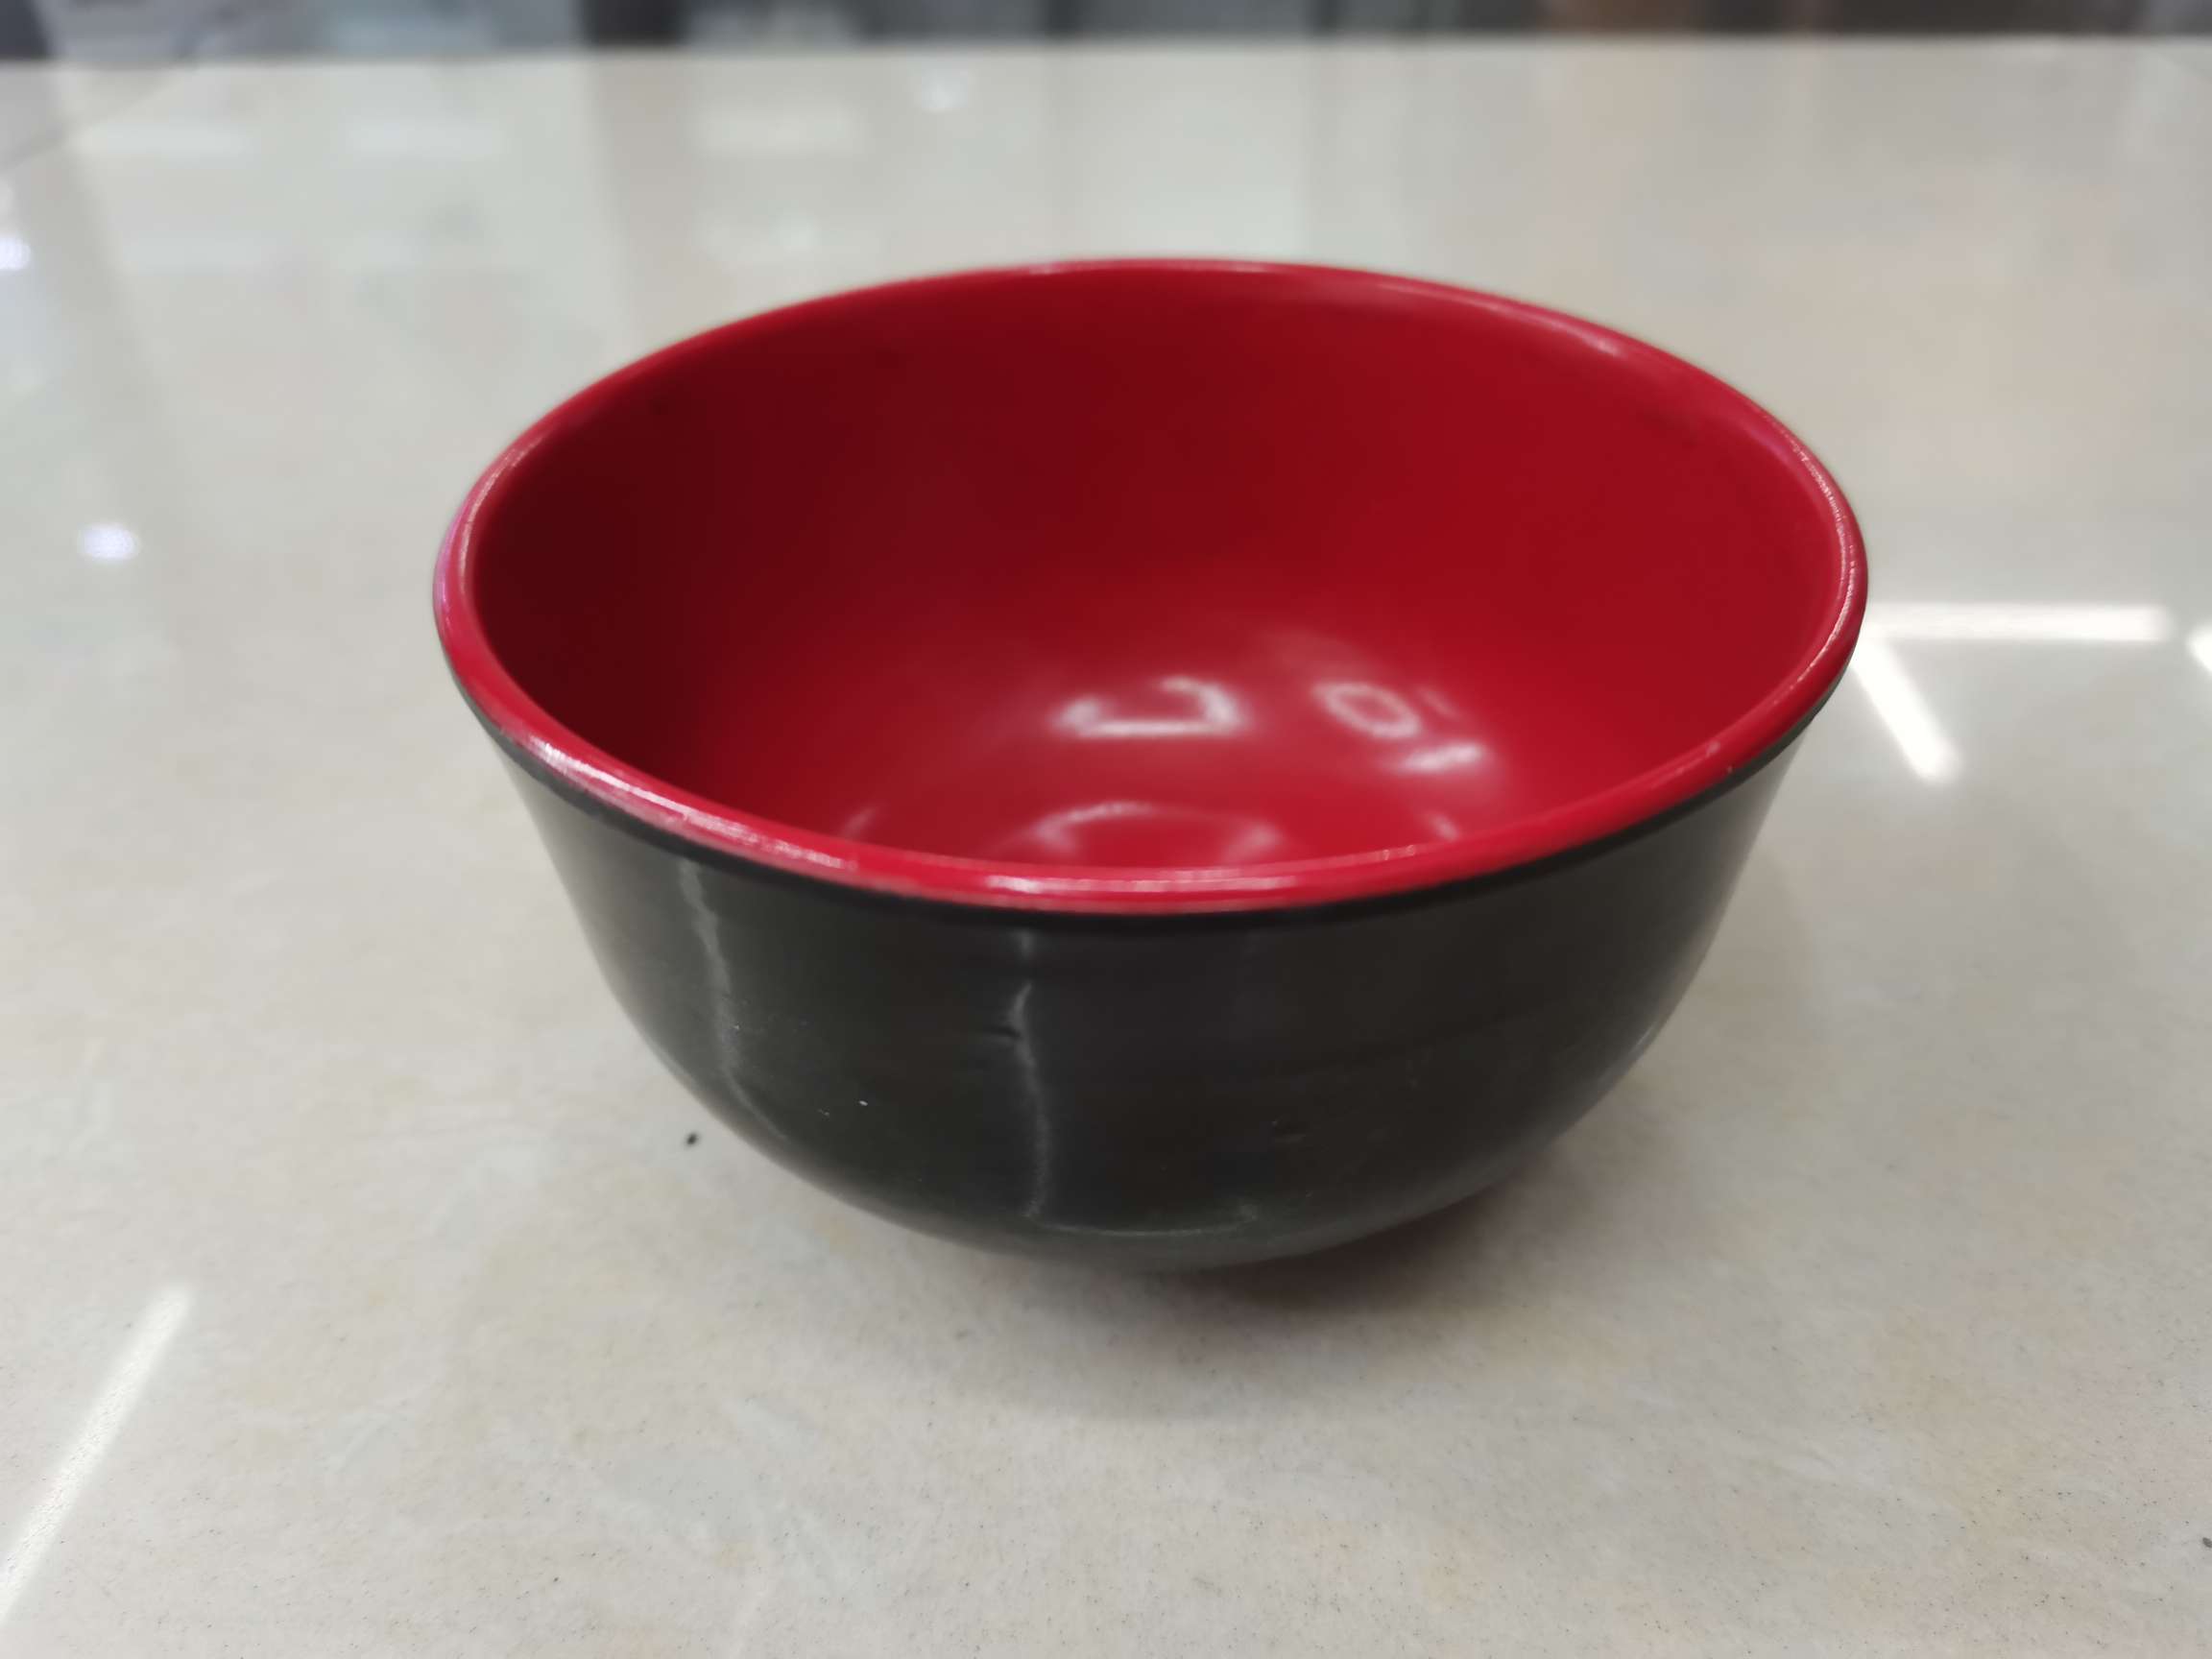 Imitation Porcelain Melamine Tableware Plastic Plate and Bowl Rice Noodles Bowl Black Red Bowl Noodle Bowl Breakfast Bowl Soup Bowl 5045 Black Red Two-Tone Bowl